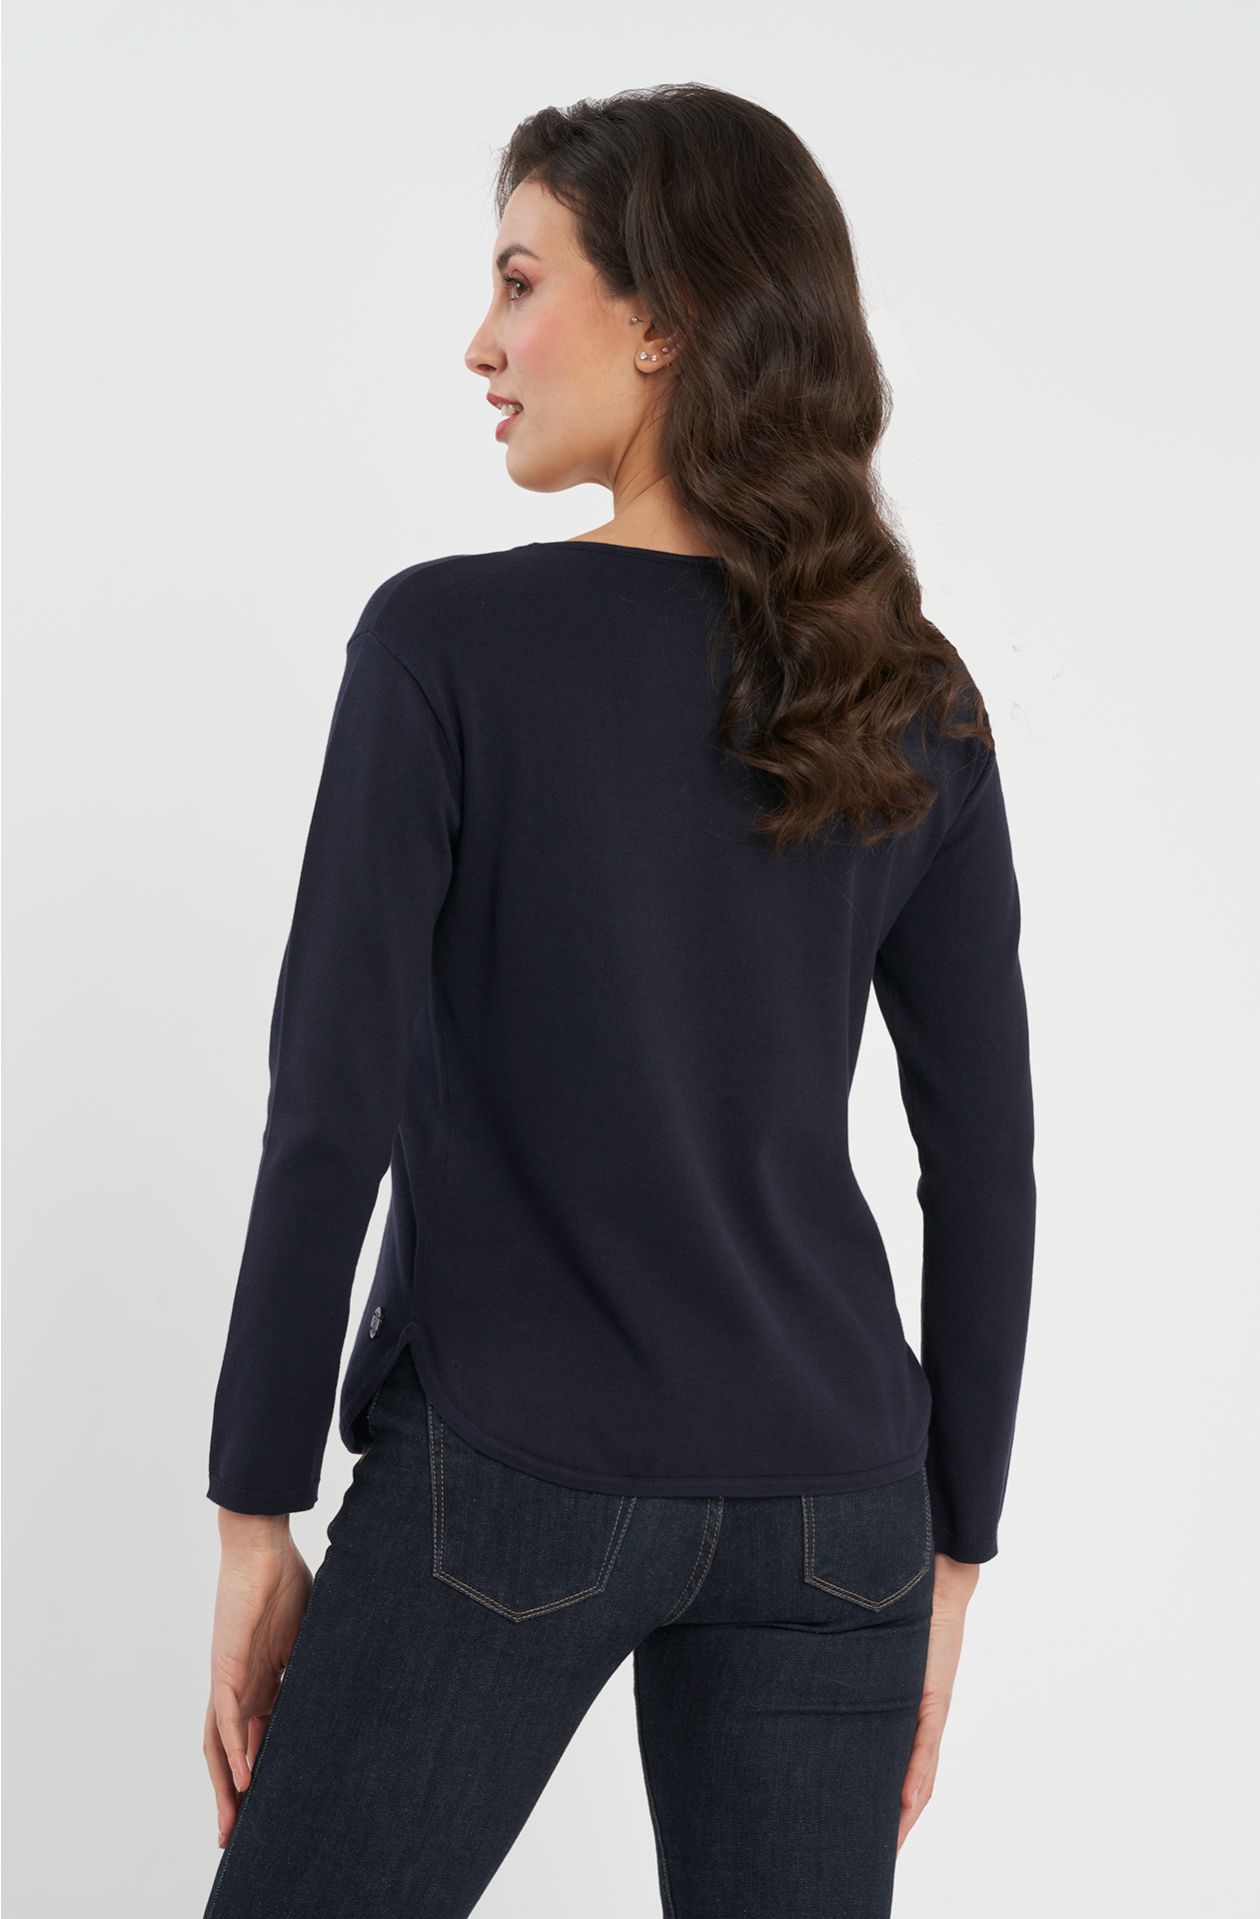 Urban style cotton sweater